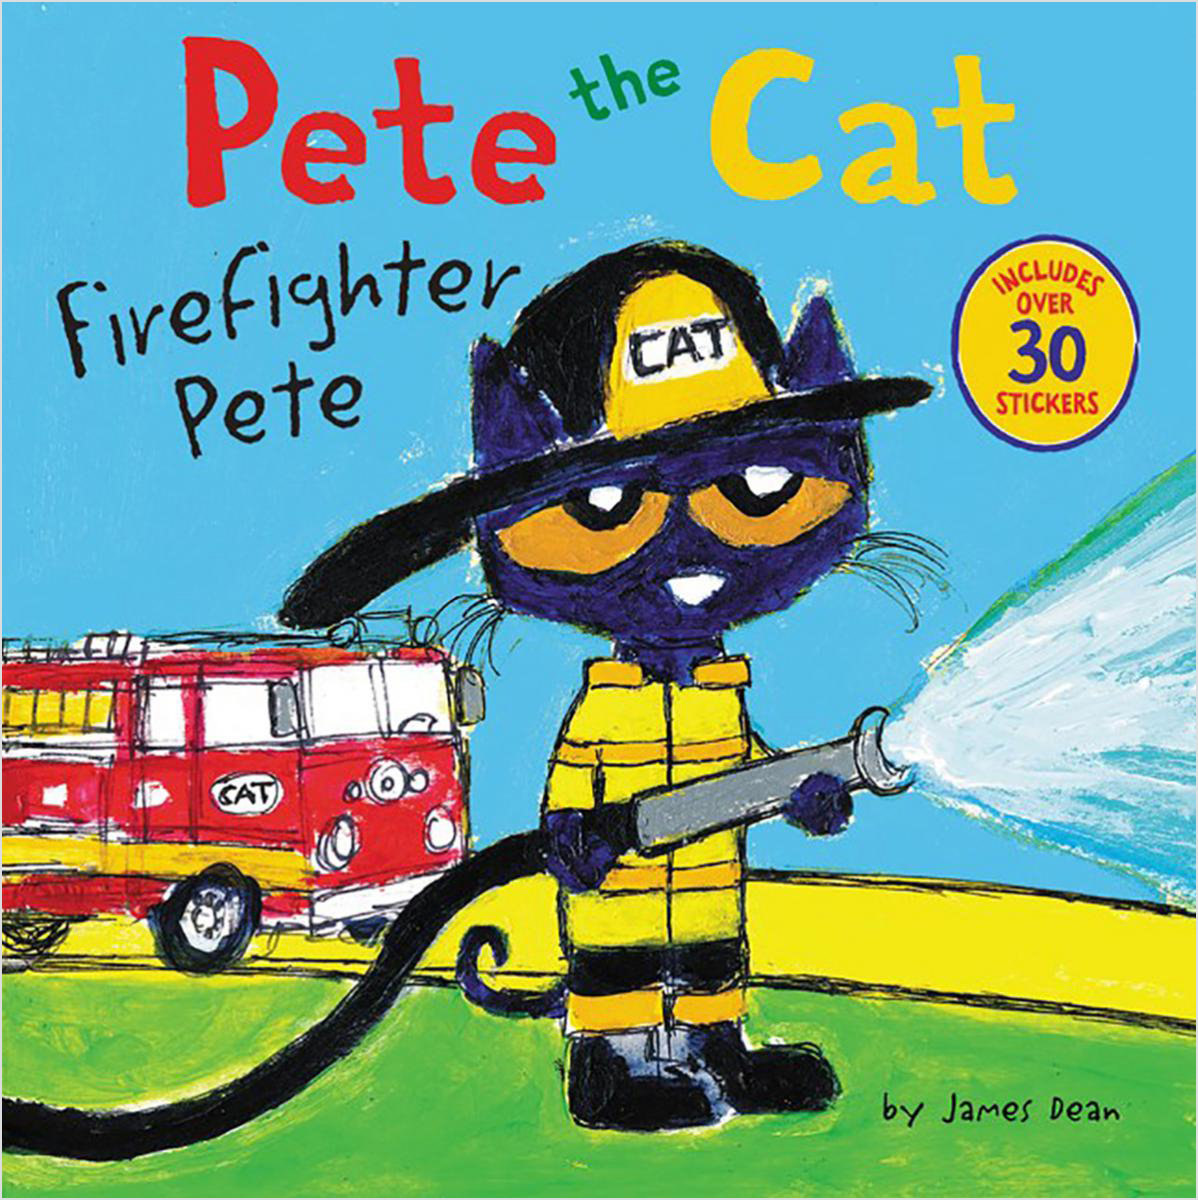  Pete the Cat: Firefighter Pete 